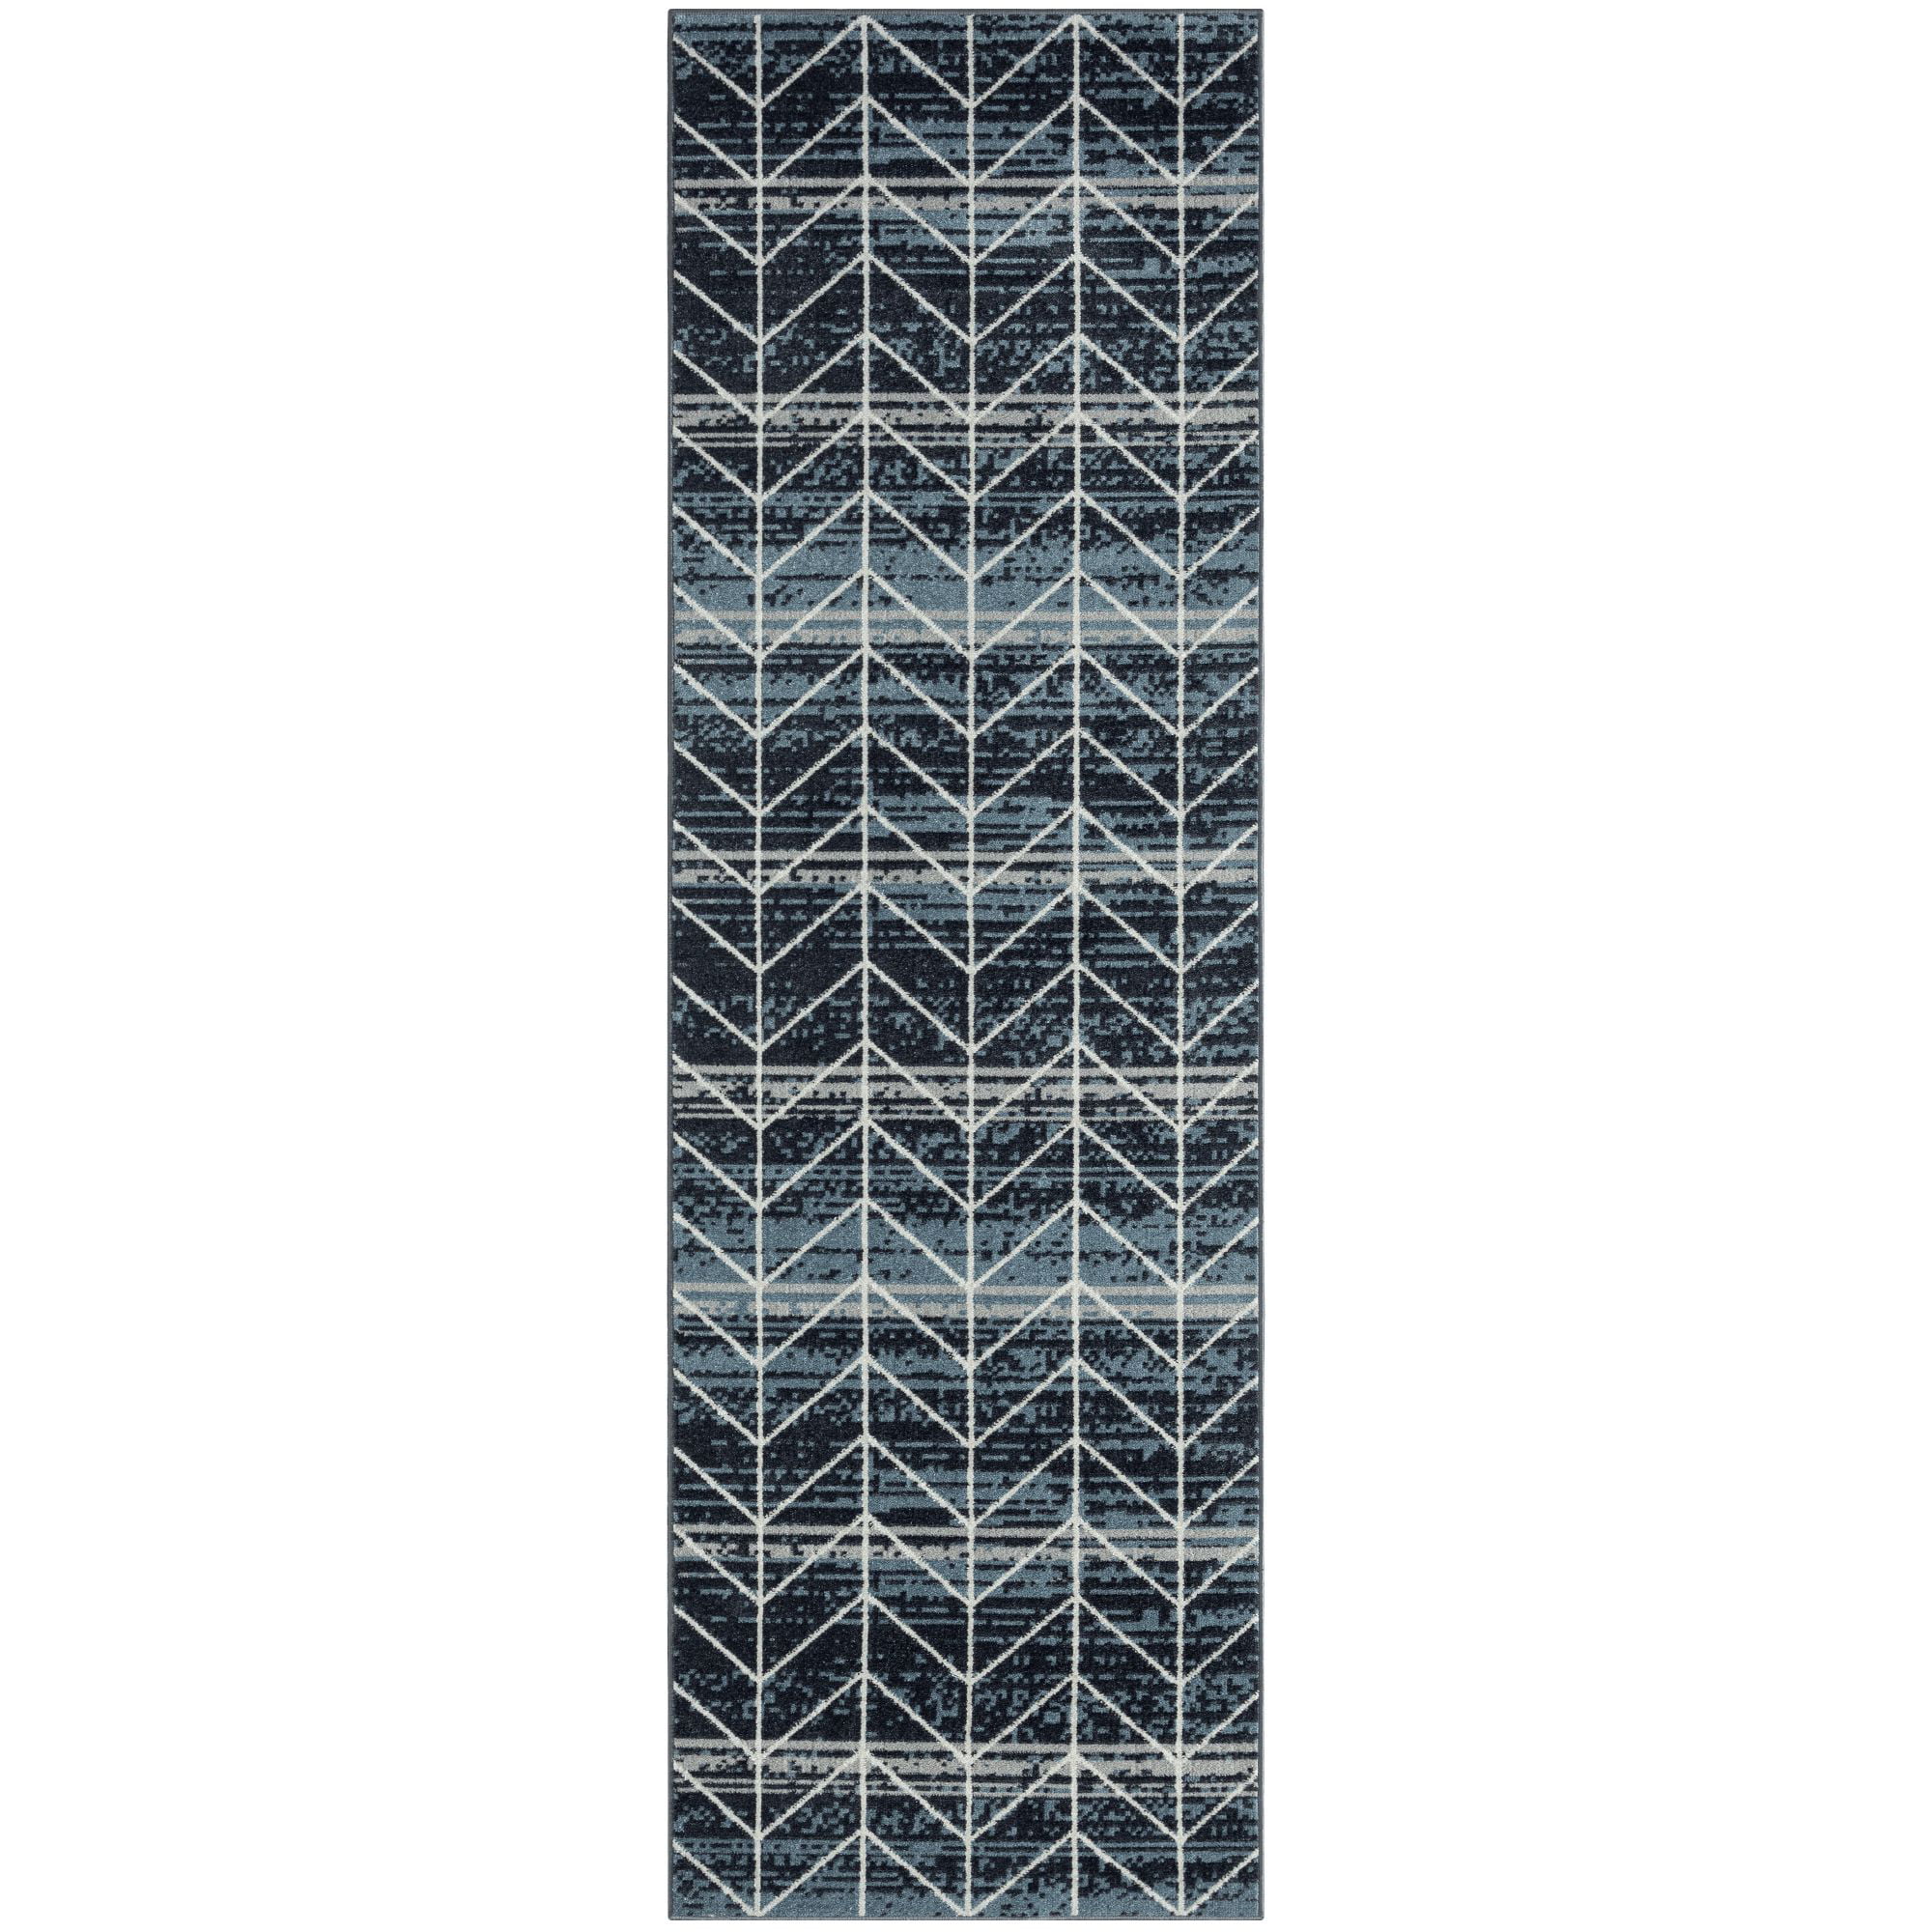 Washable Rugs. New mottled Black/Grey square Pattern runner 67cm/2'2'' Wide 